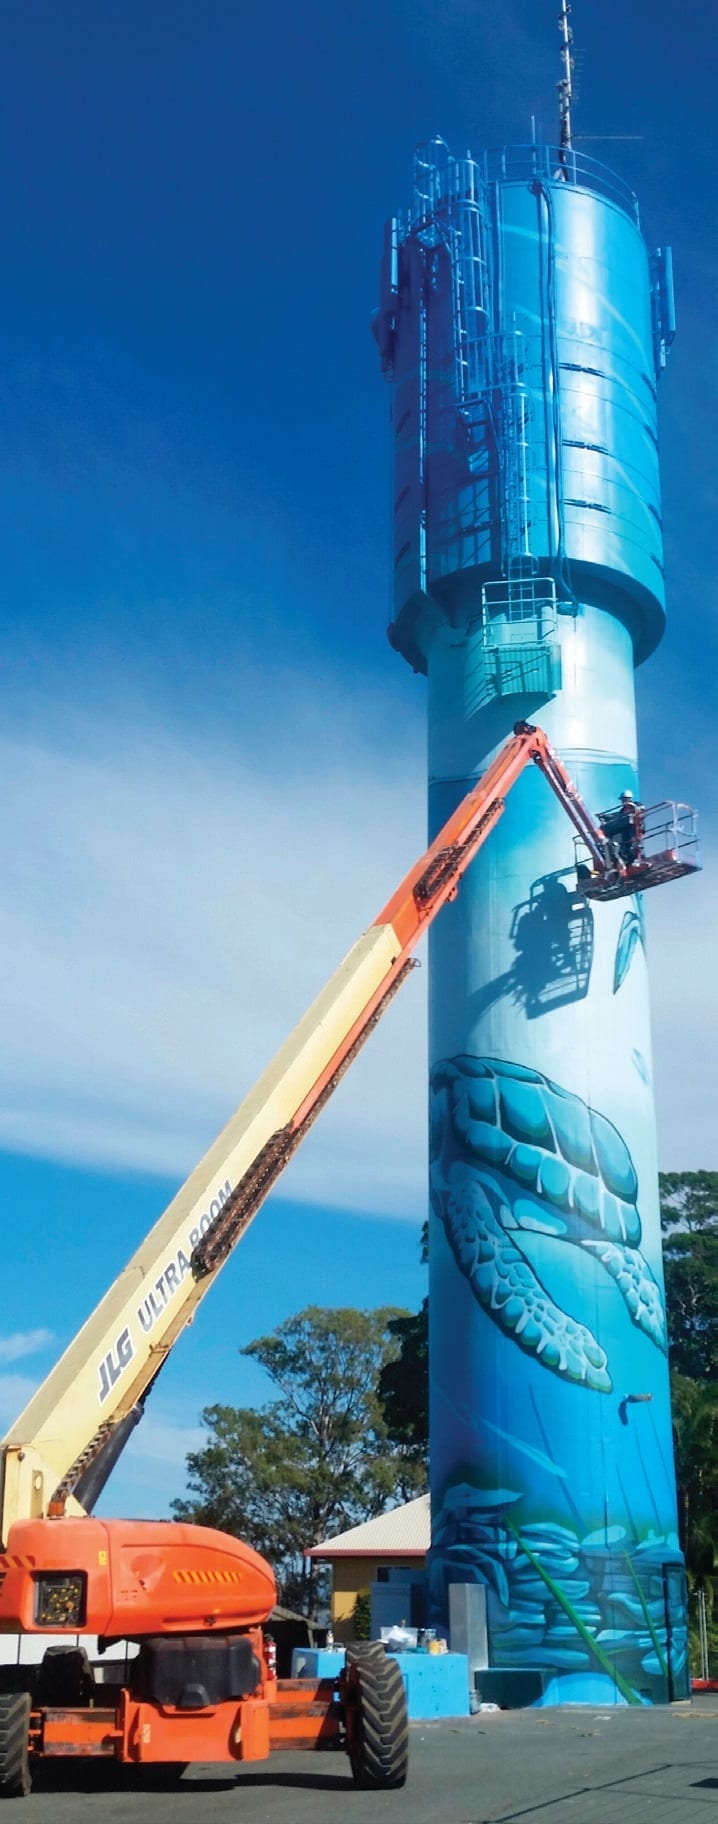 Woorim Water tower gets beautified through artwork